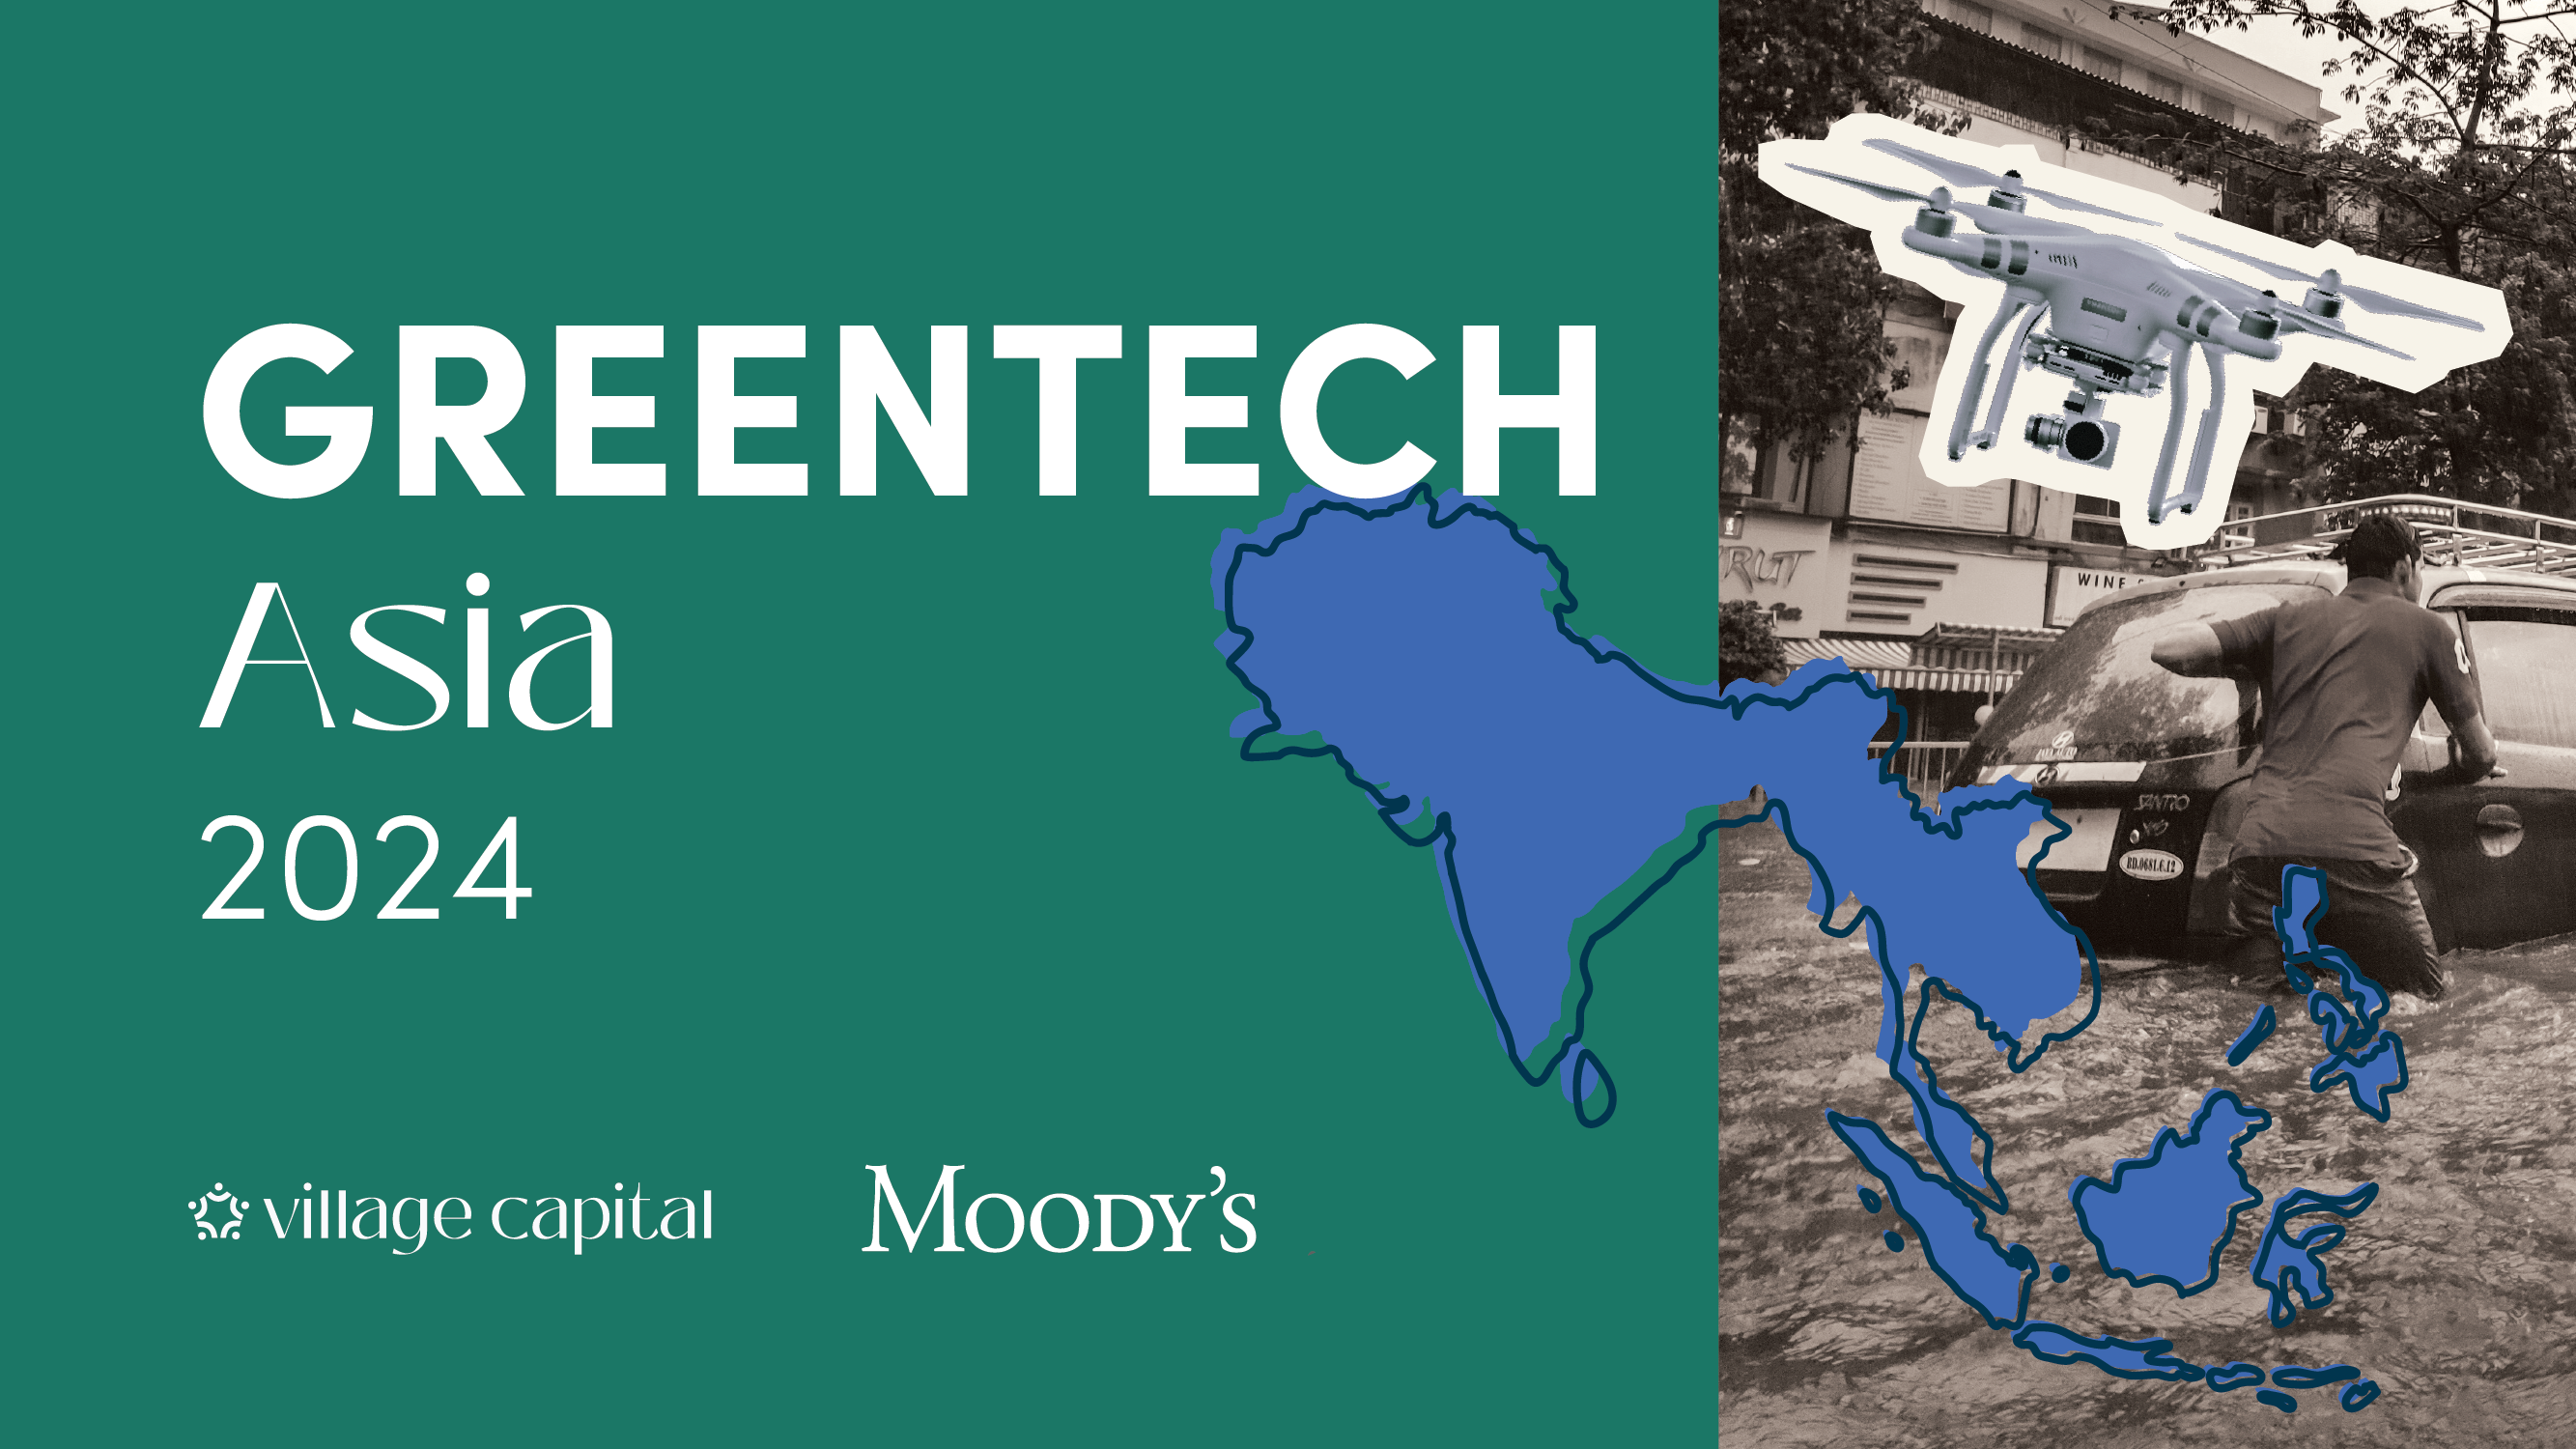 Greentech Moody-s 2024 Asia